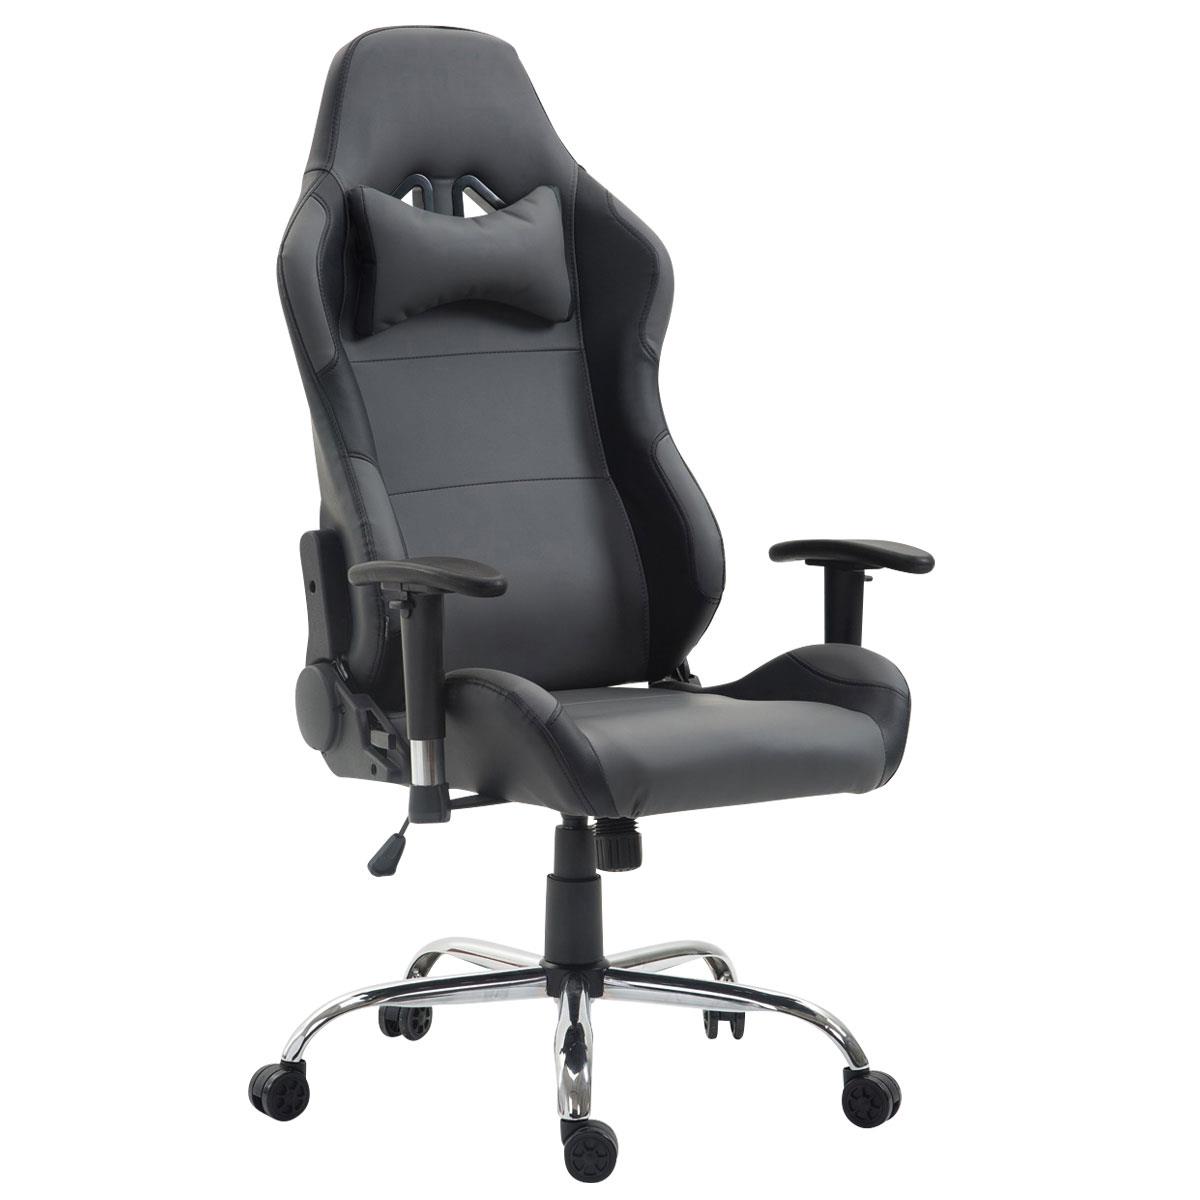 Gaming-Stuhl ROSBY. Sportliches Design und hoher Komfort, Lederbezug, Farbe Grau